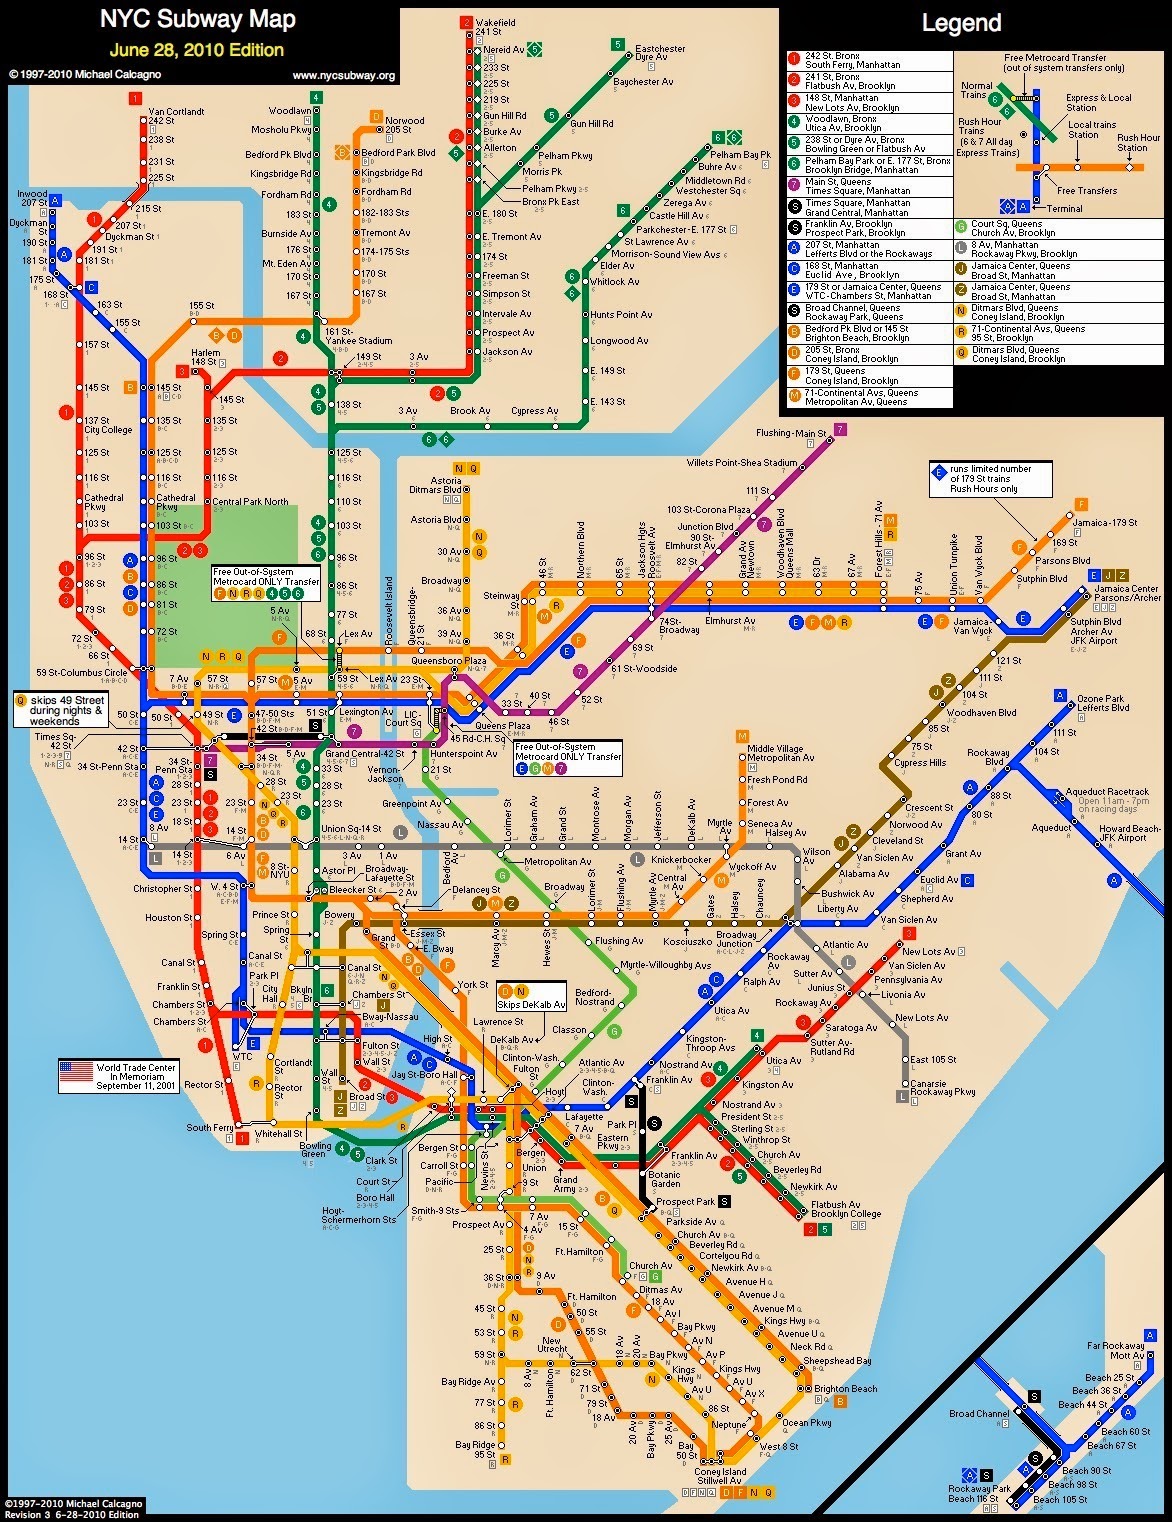 Subway2, image @iMGSRC.RU